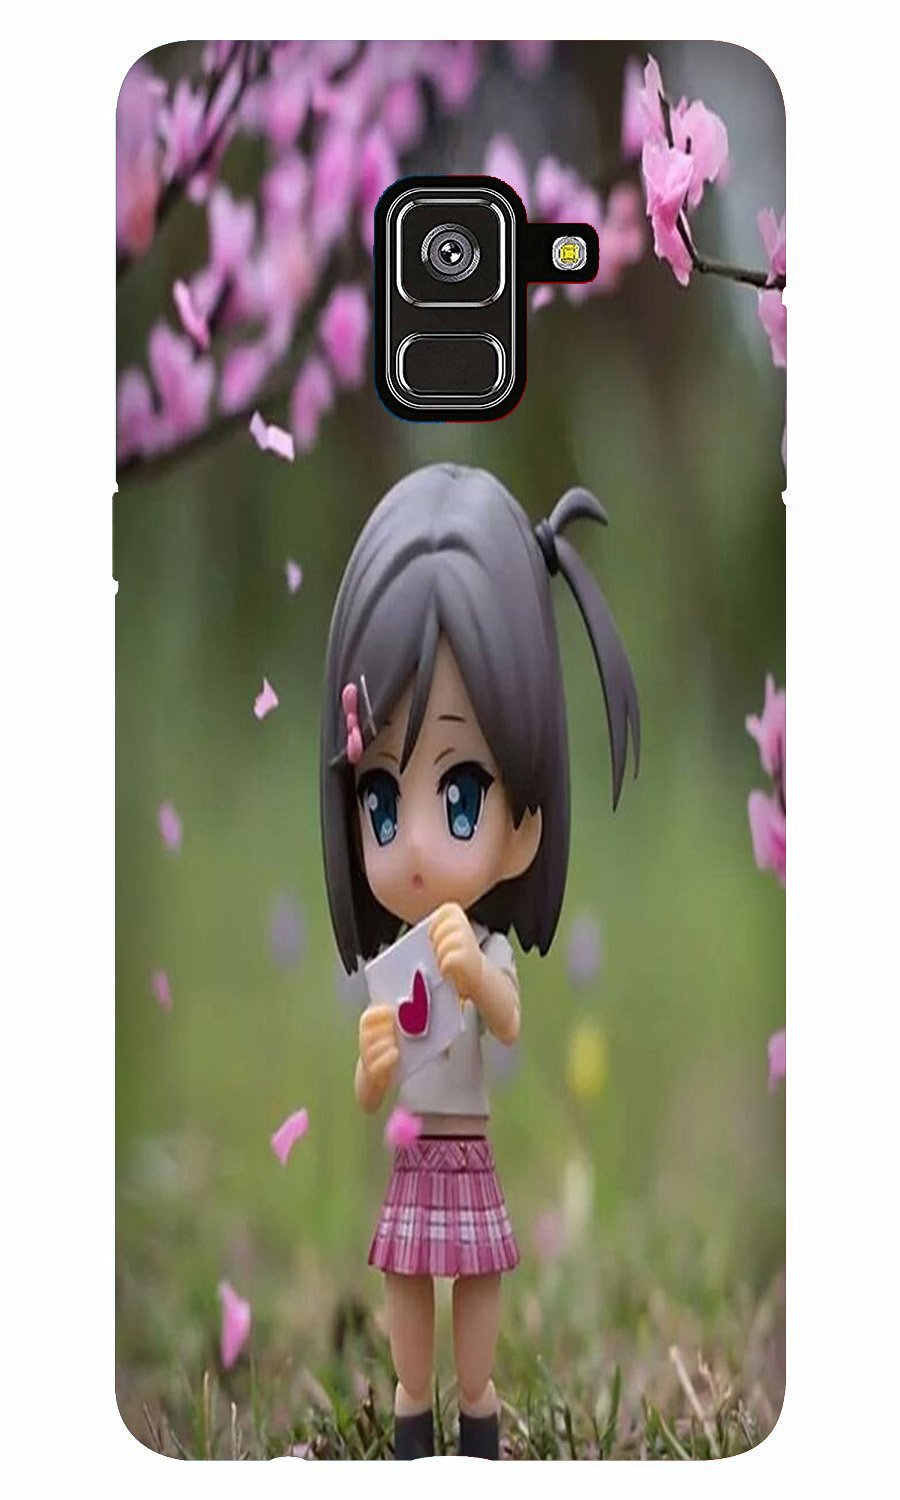 Cute Girl Case for Galaxy A8 Plus